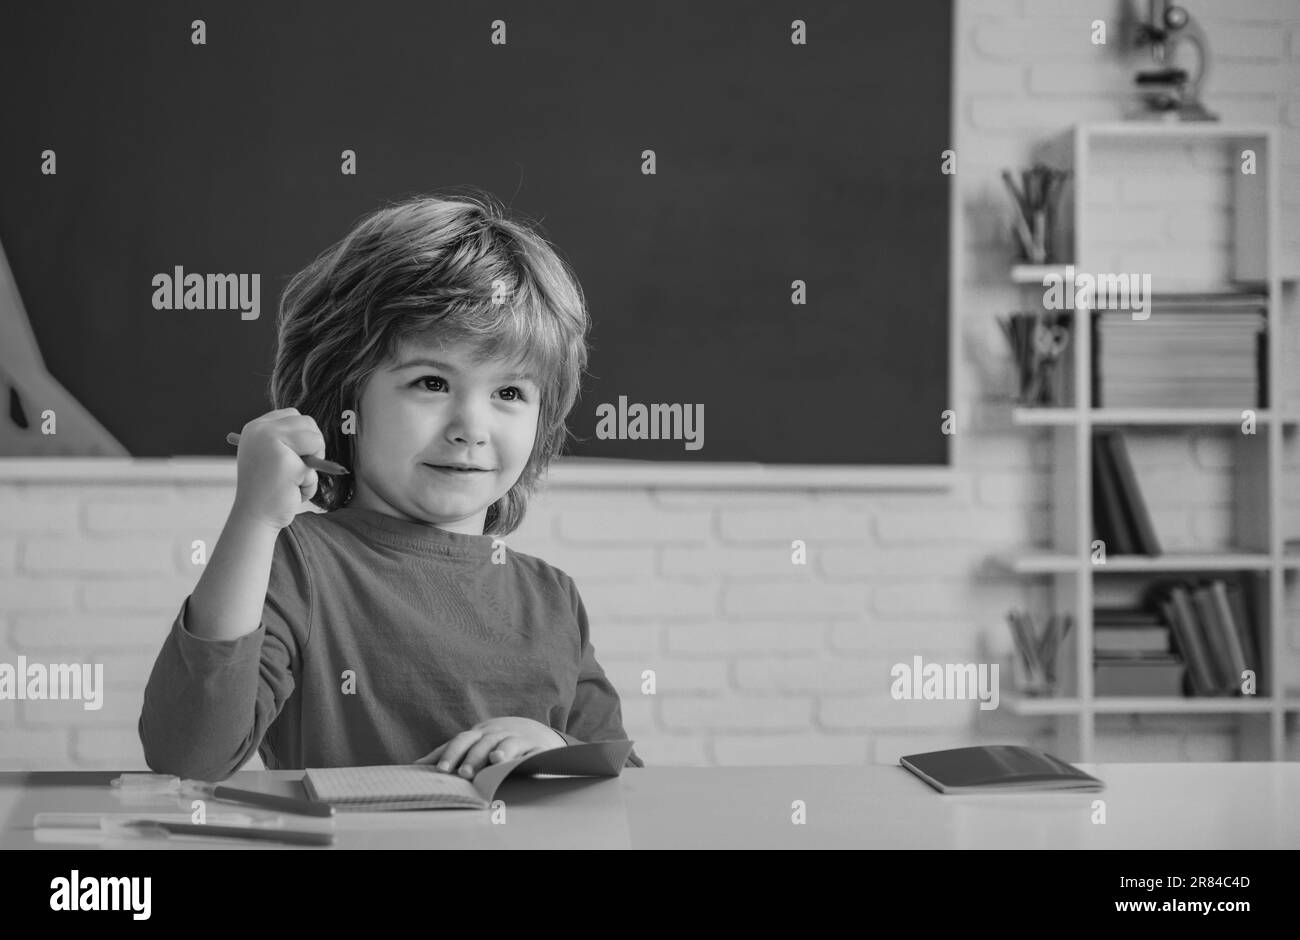 Children learning. Cute child boy in classroom near blackboard desk. Chalkboard copy space. School education and people concept - cute pupil over Stock Photo